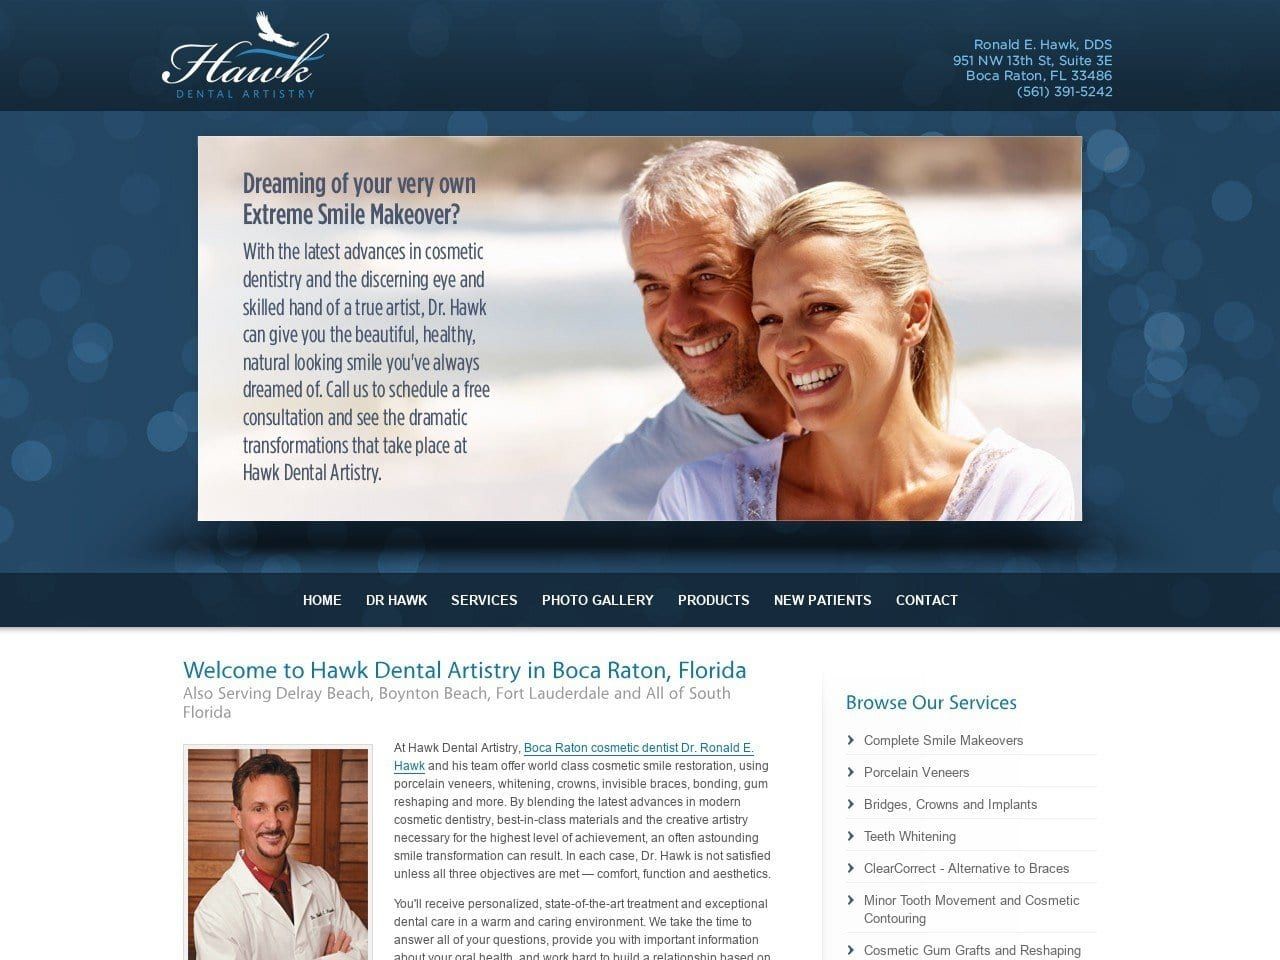 Dr. Ronald E. Hawk DDS Website Screenshot from hawkdentalartistry.com